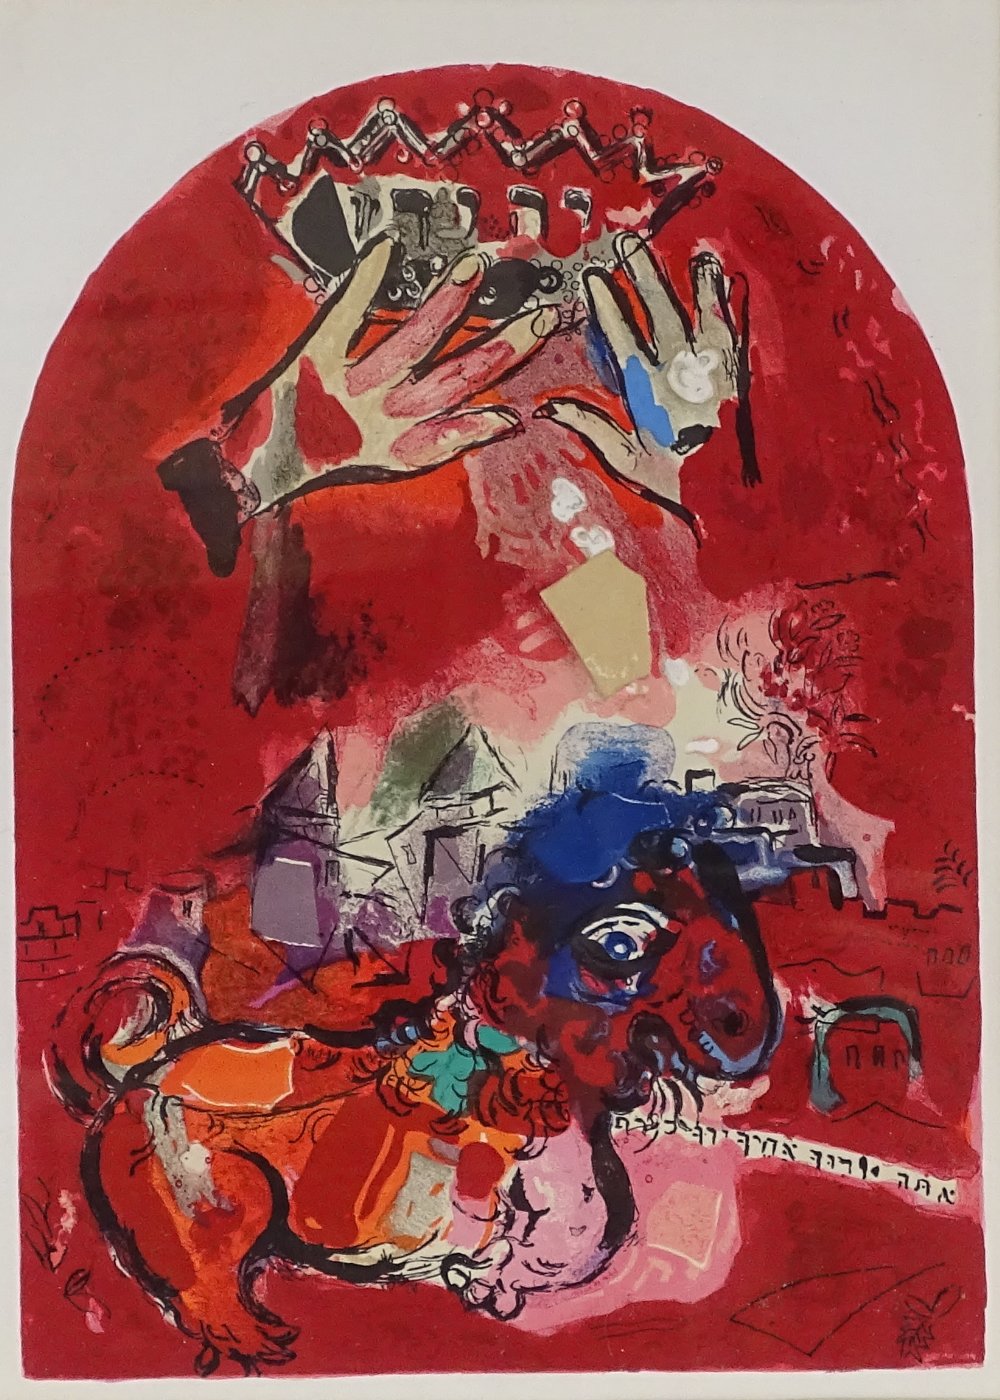 After Marc Chagall, colour lithograph by Sorlier, Jerusalem window design, image size 11.5" x 8.